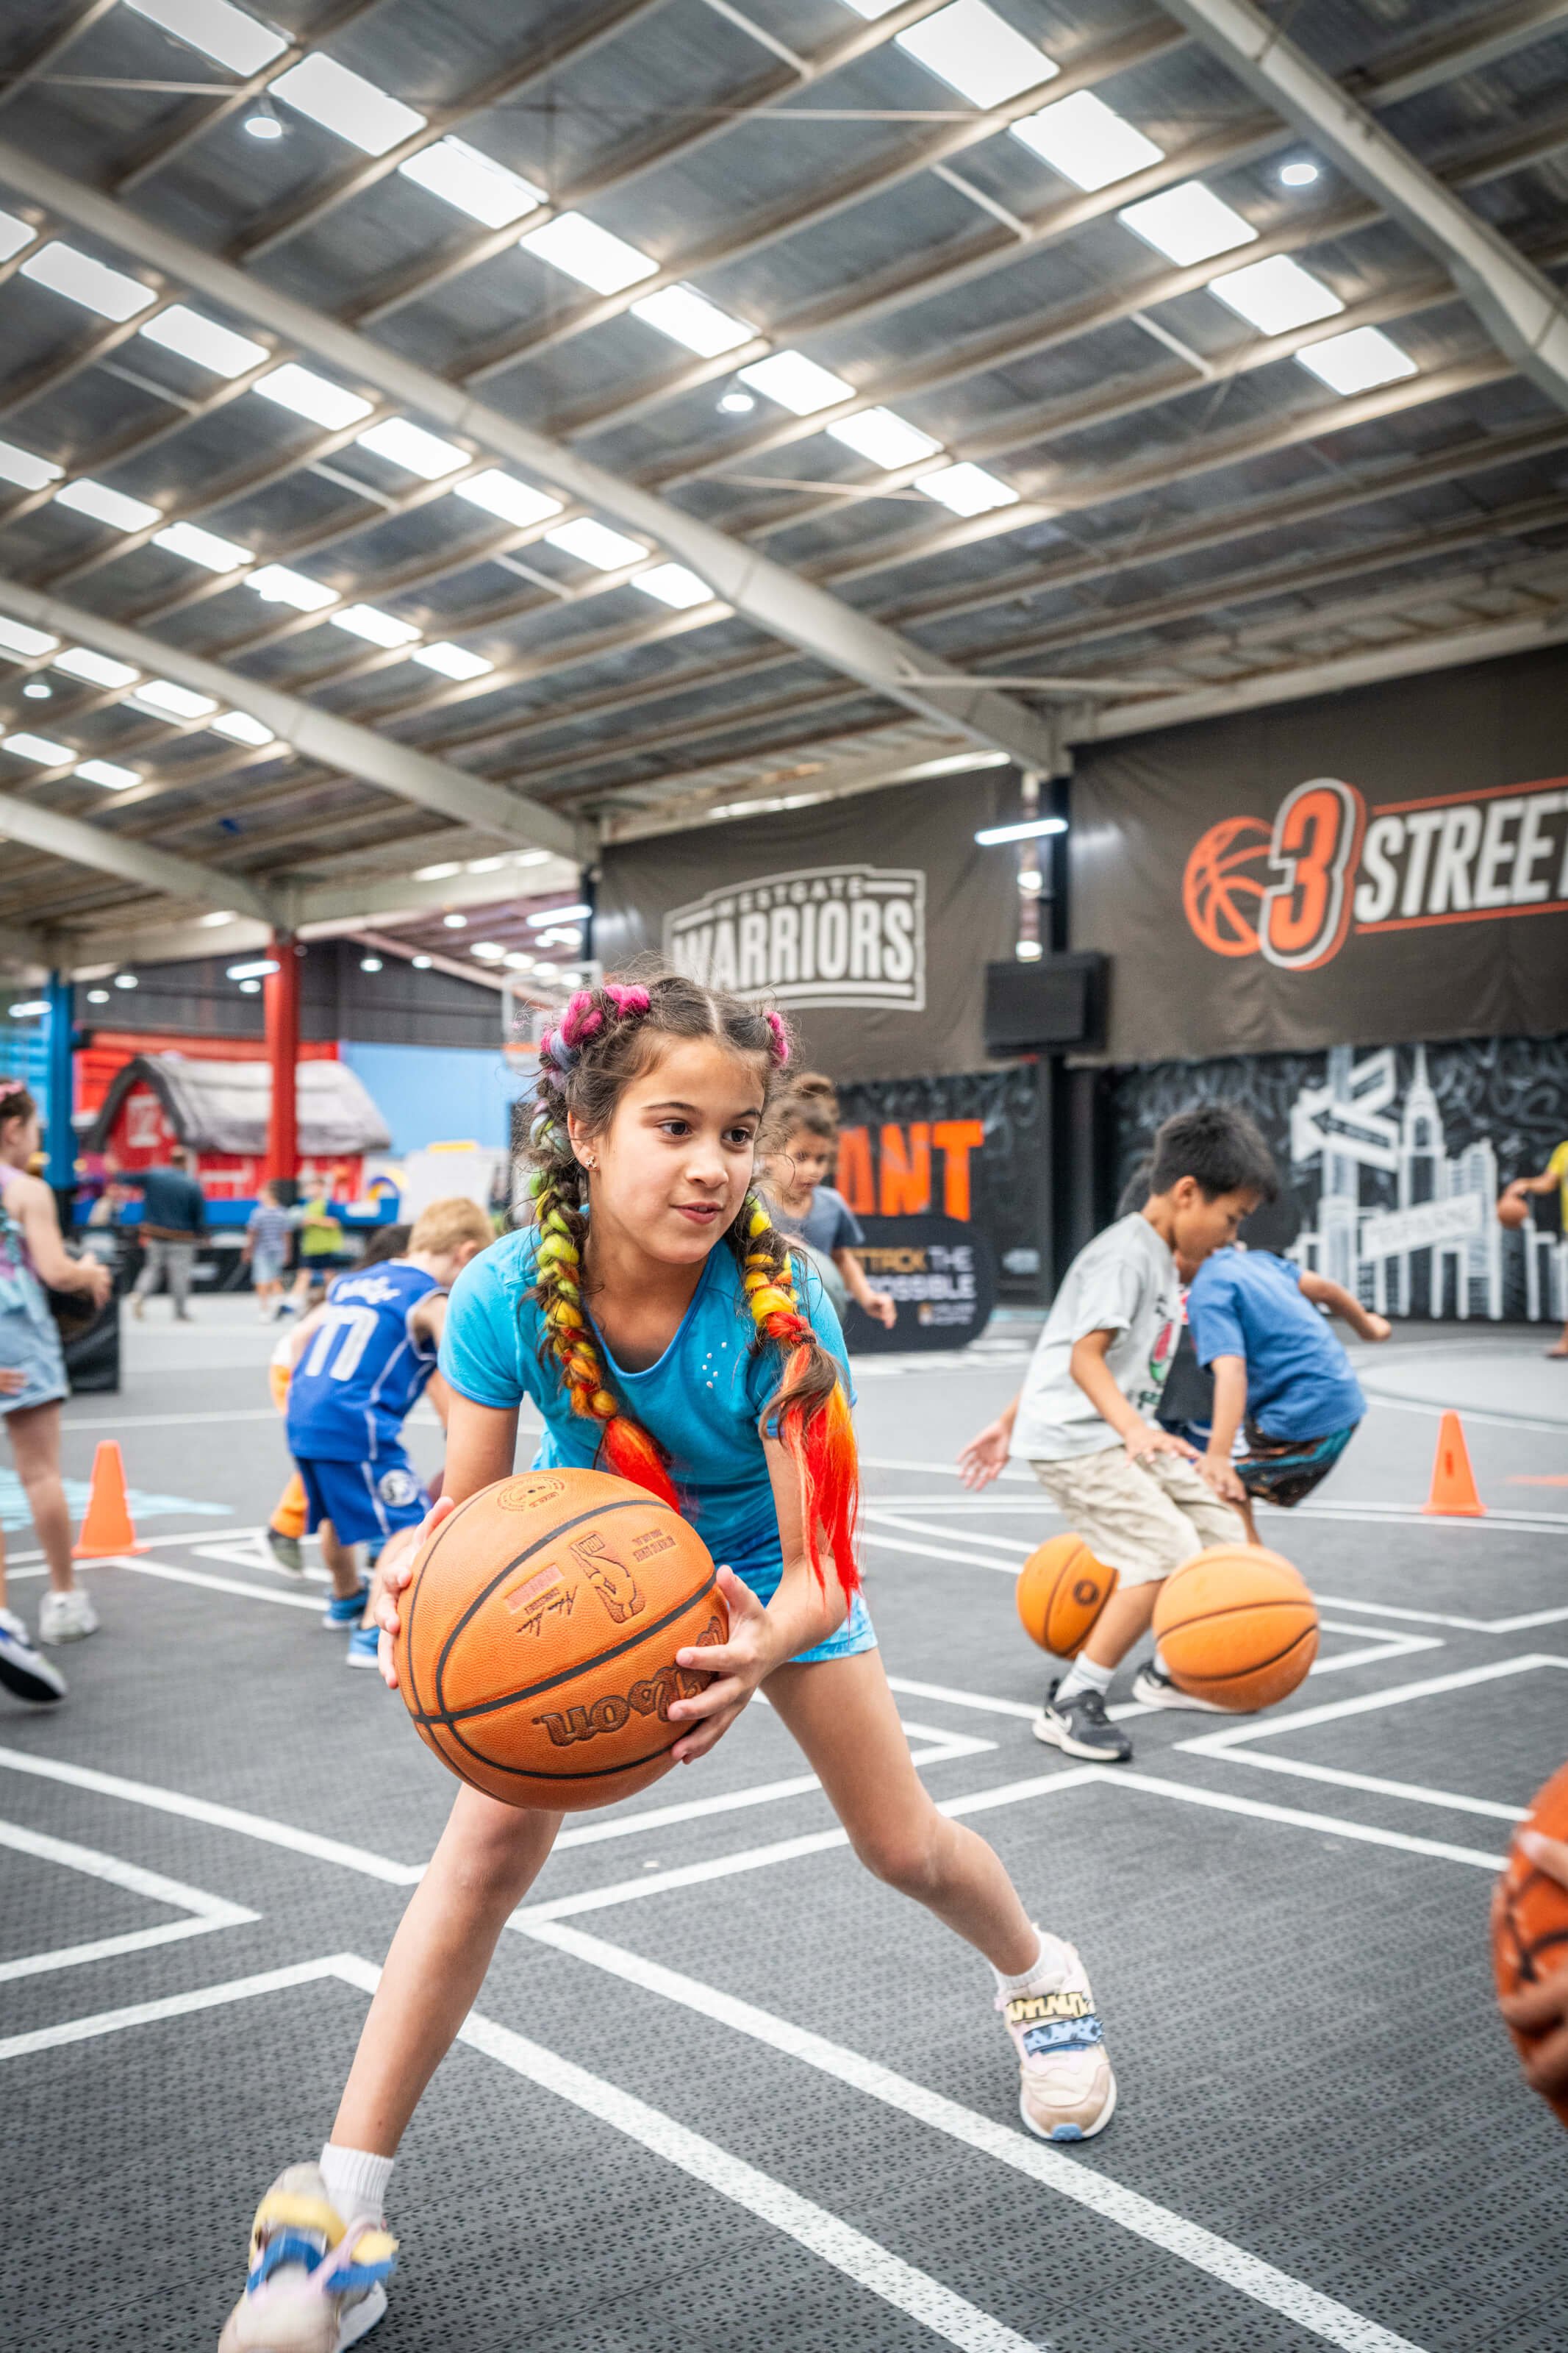 Basketball Kids | 3 Street Basketball.jpg